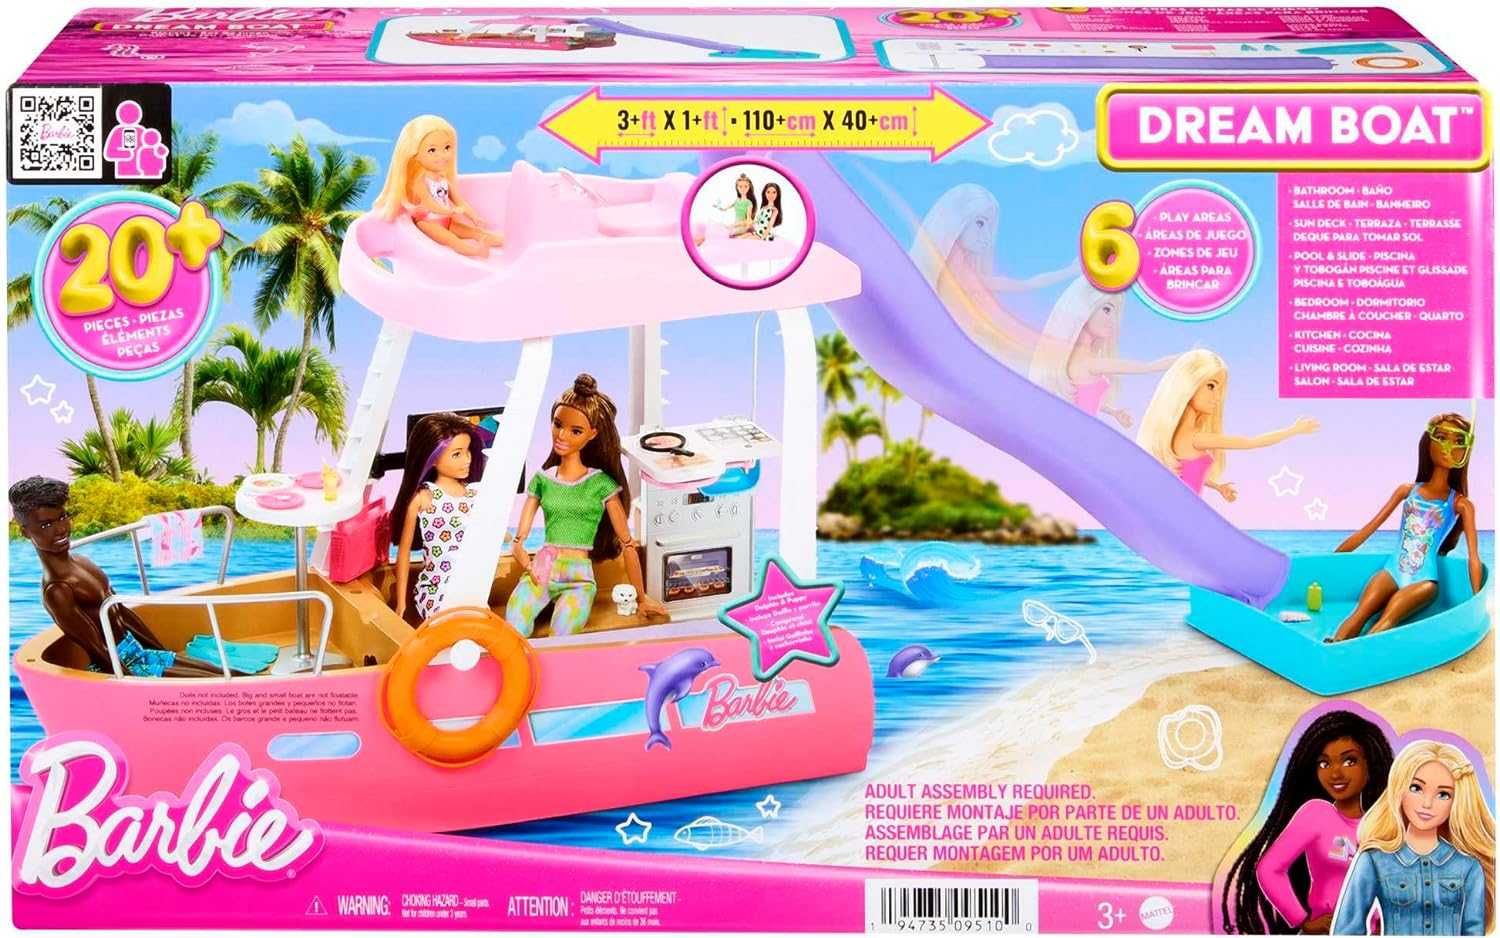 Великий ігровий набір Barbie Dream Boat, Pink with 6 Play Areas